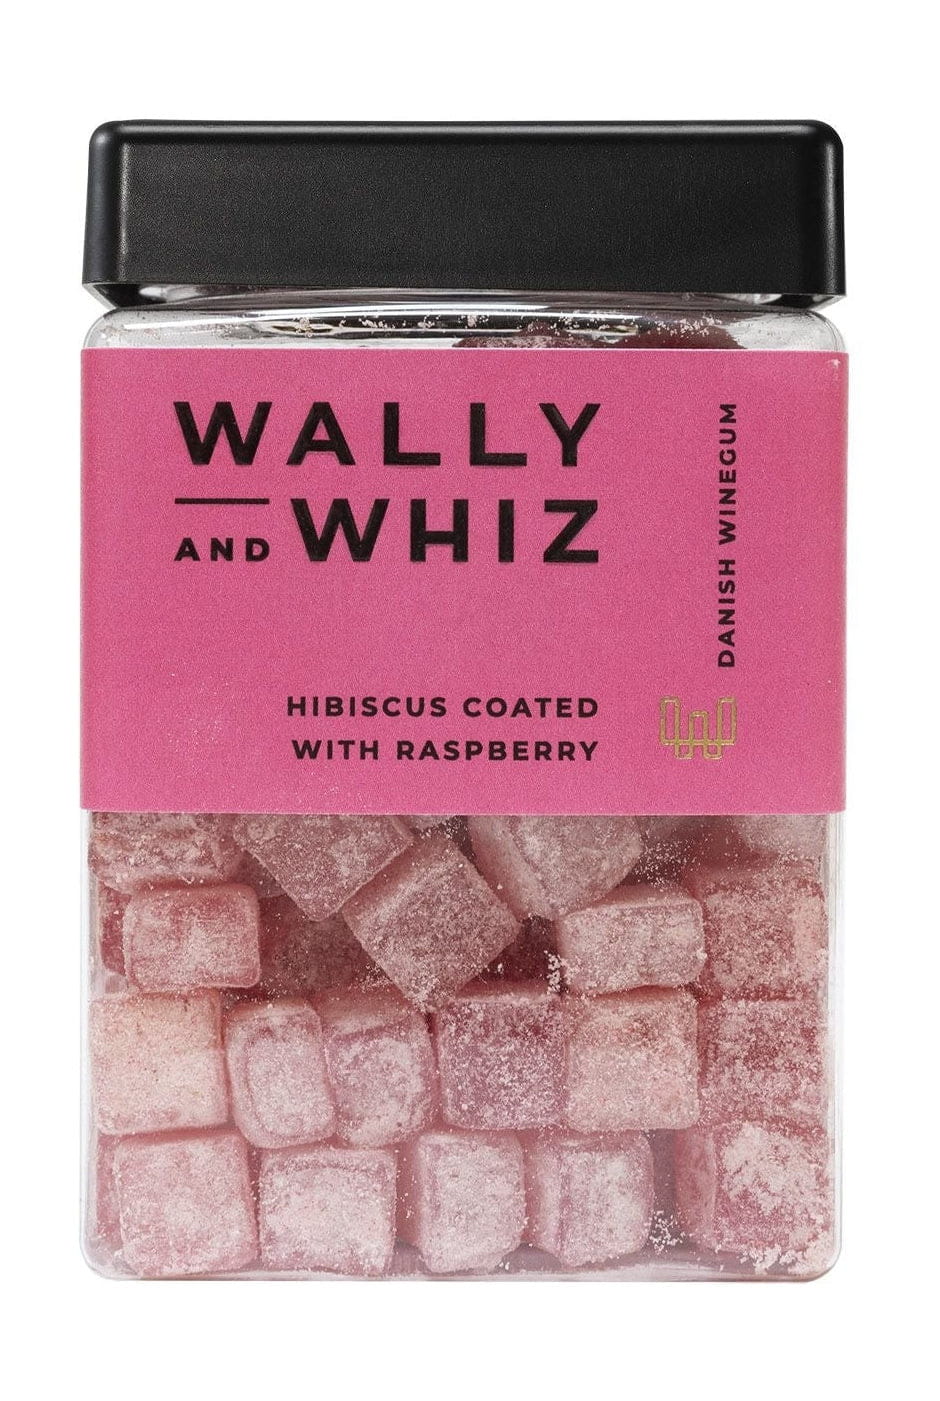 Wally And Whiz Vin gummi terning, hibiscus med hindbær, 240 g